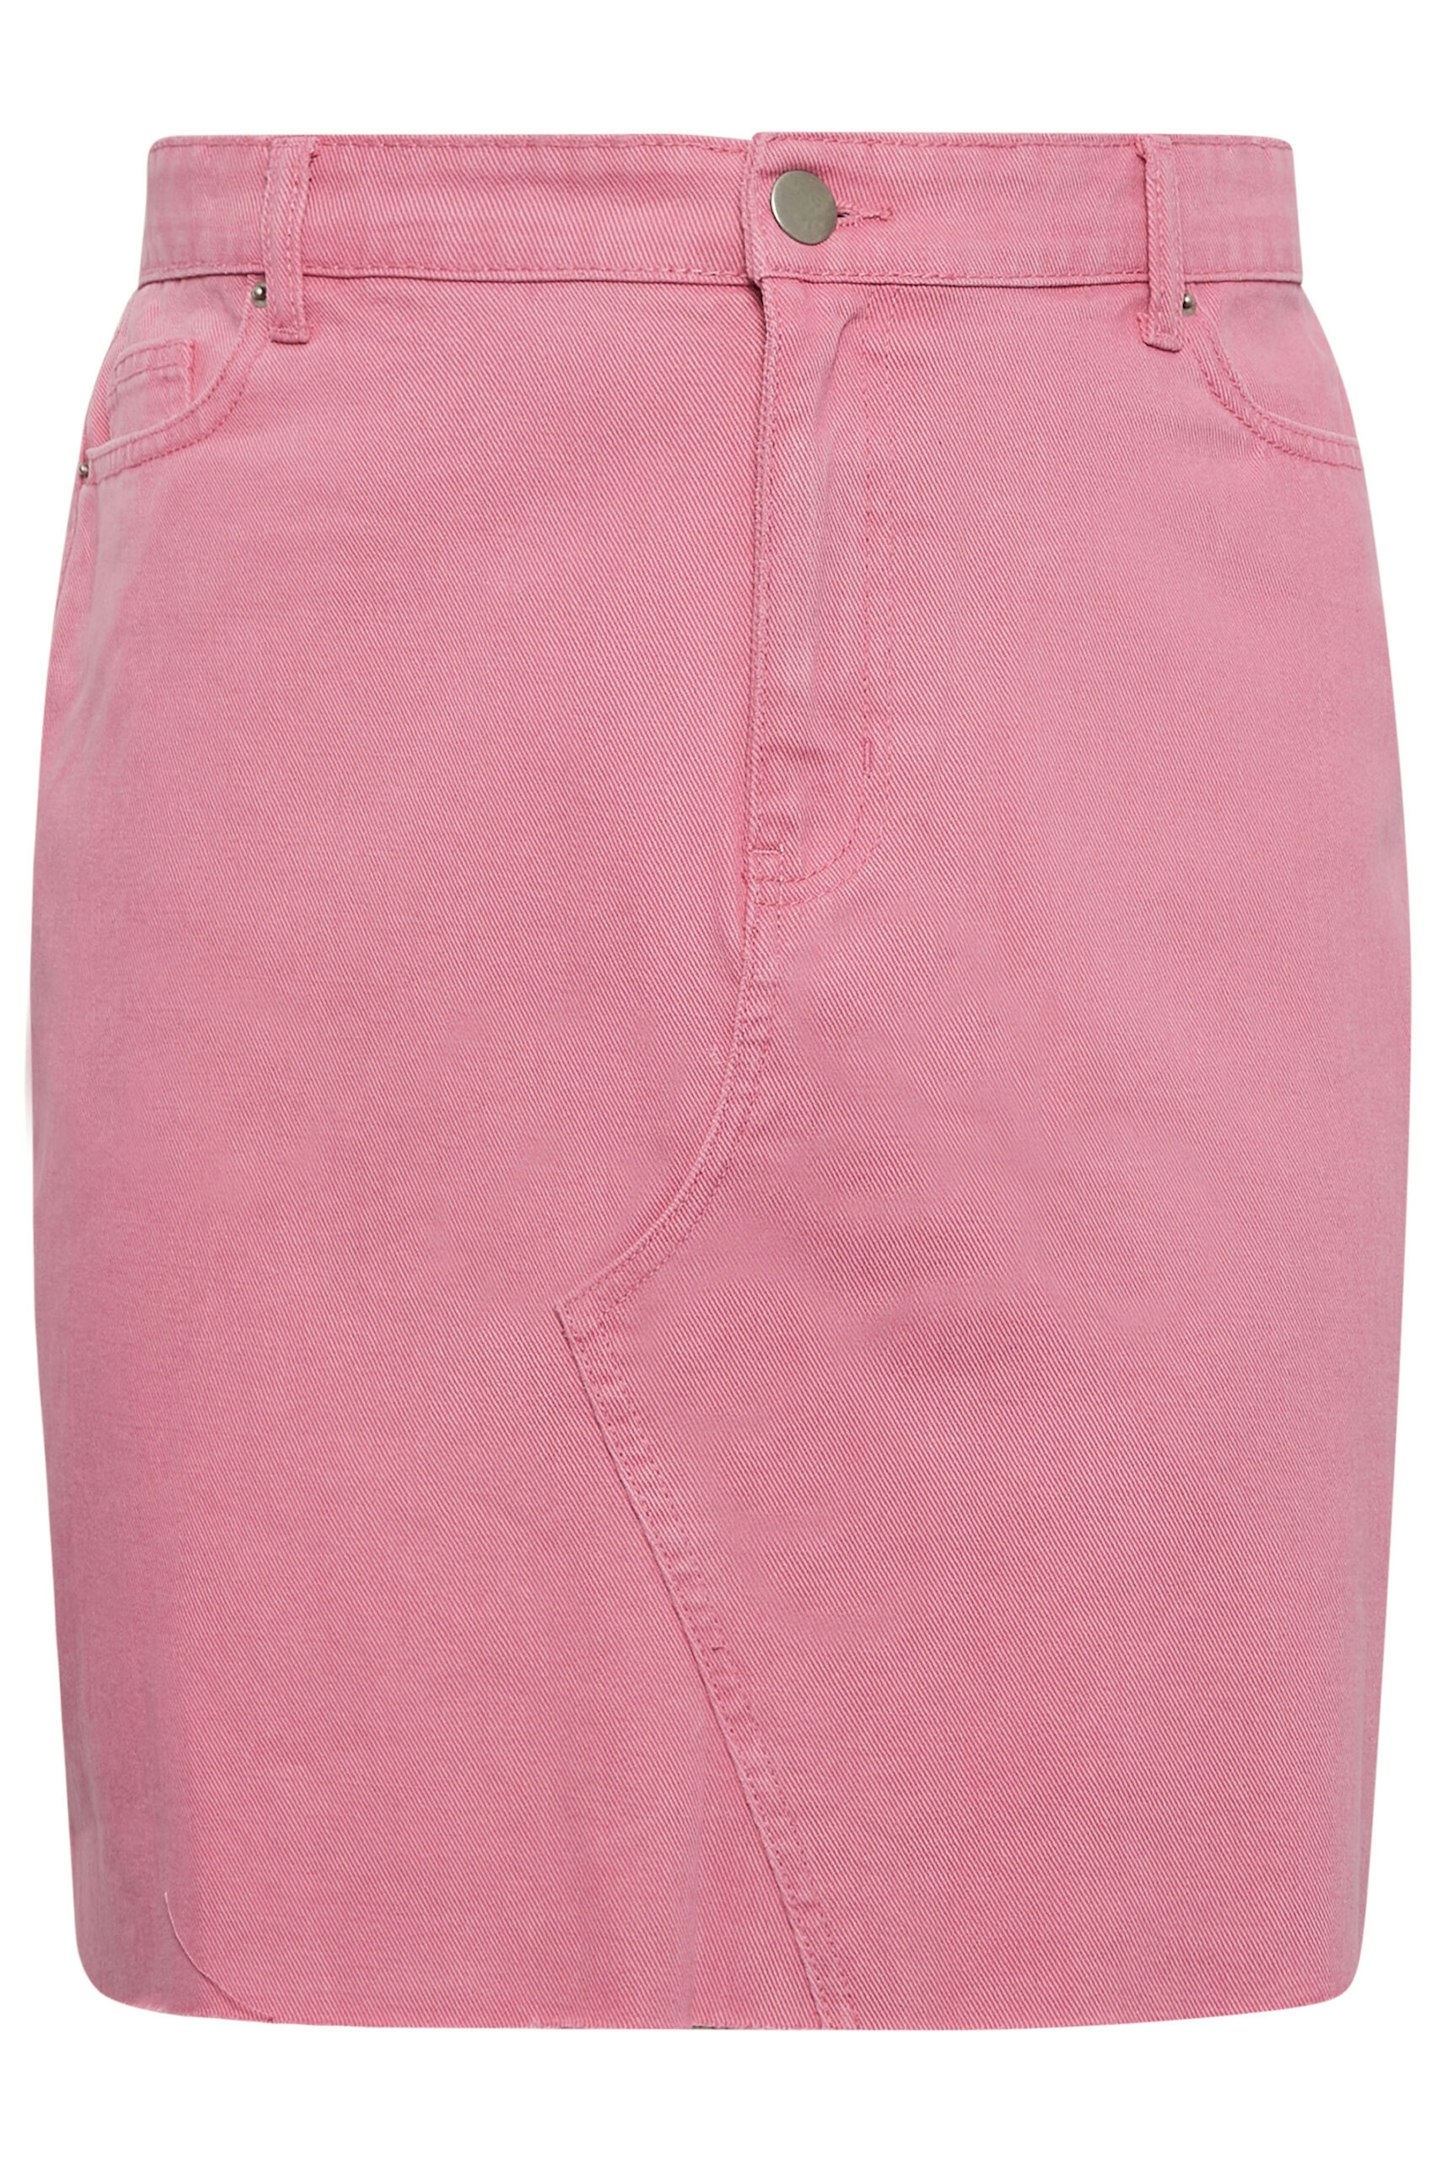 Yours pink denim skirt